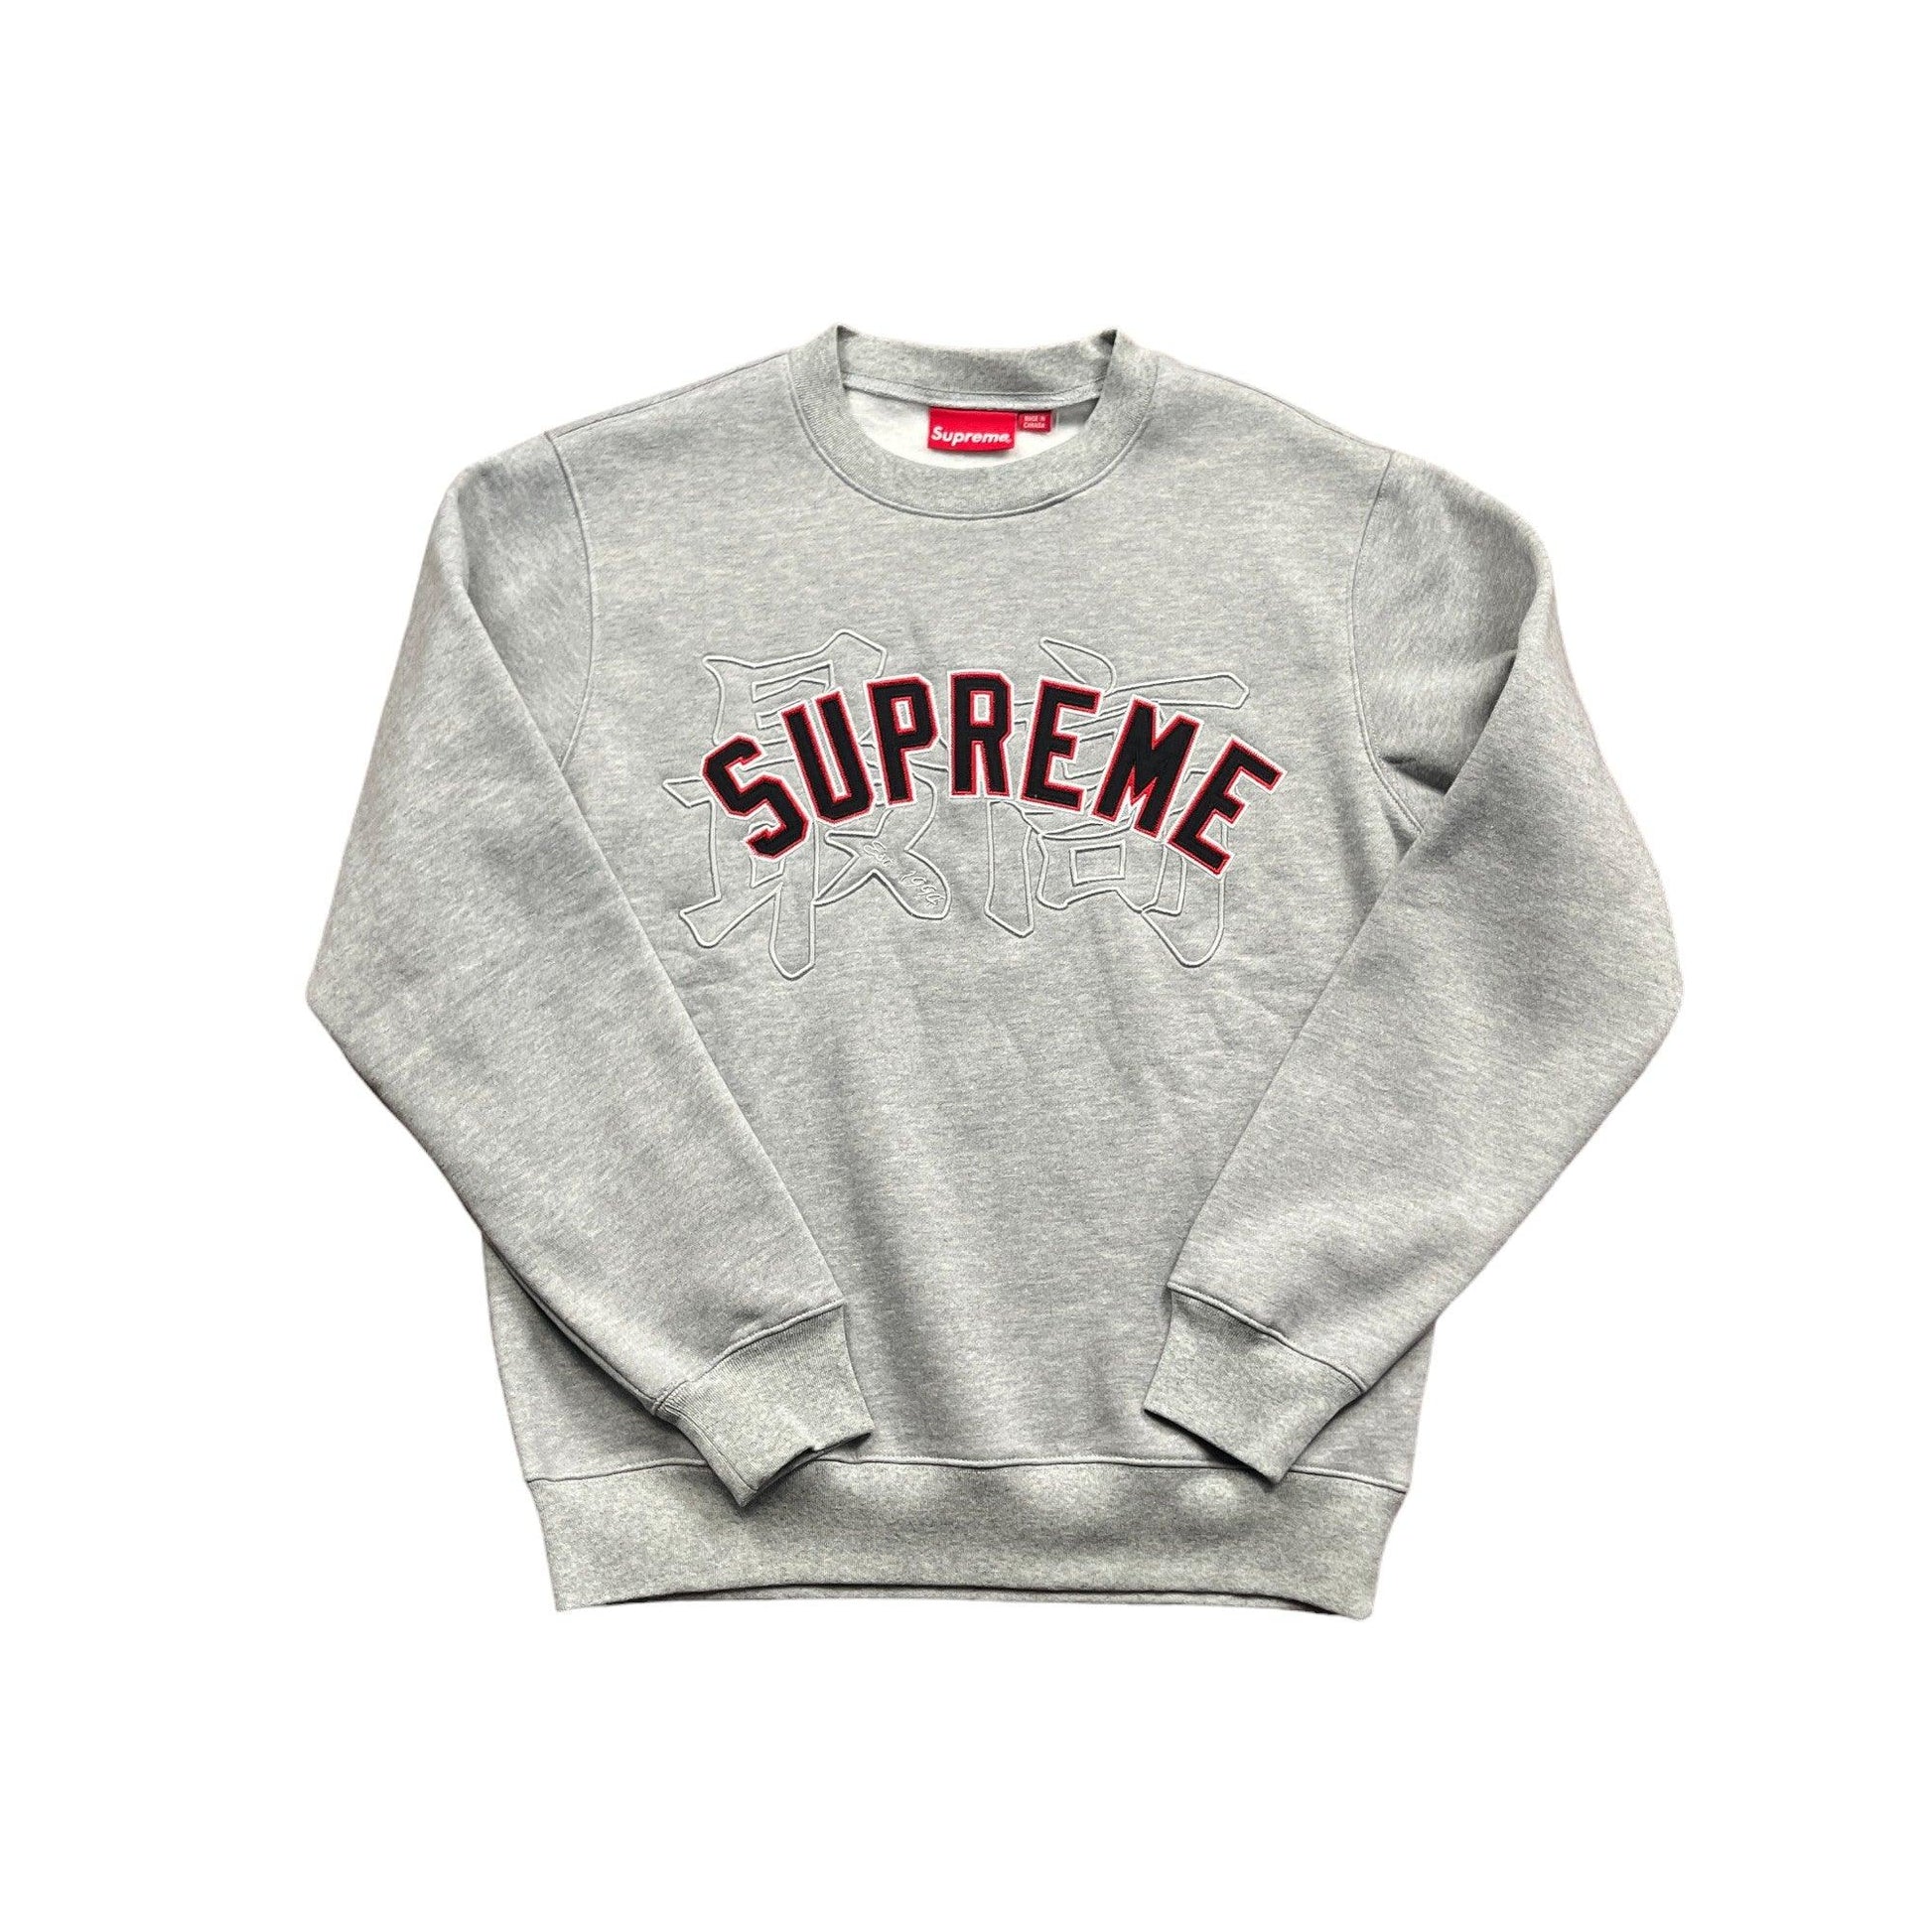 Grey Supreme Kanji Sweatshirt - Medium - The Streetwear Studio